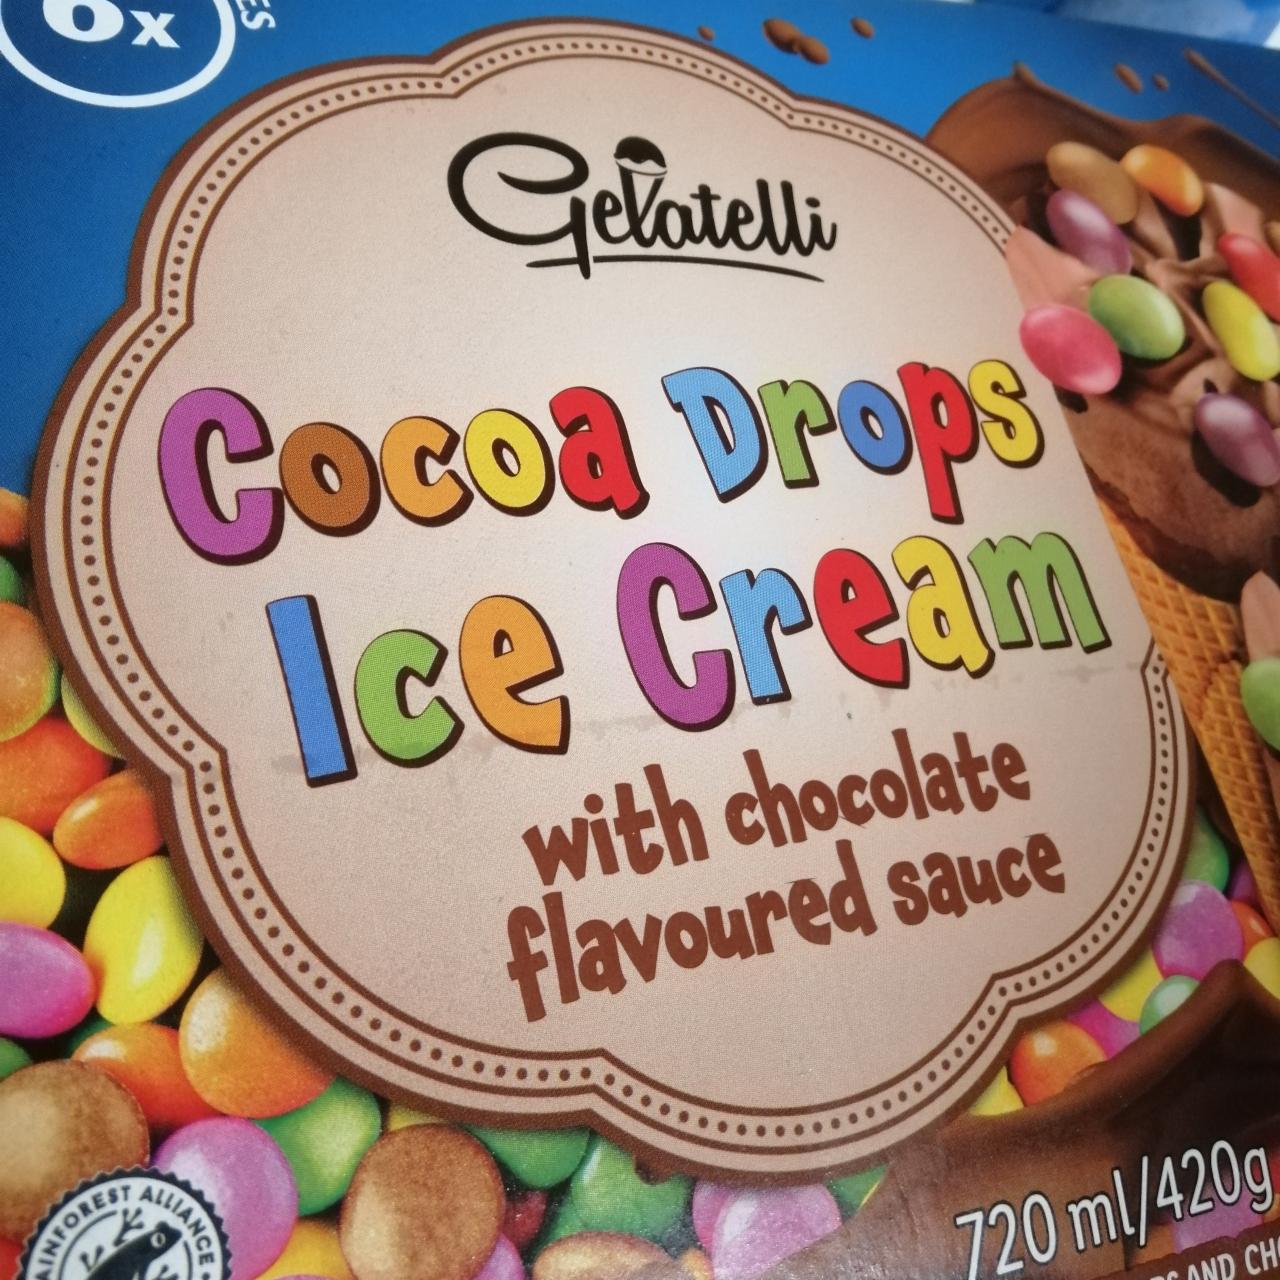 Fotografie - Cocoa drops ice cream with chocolate flavoured sauce Gelatelli